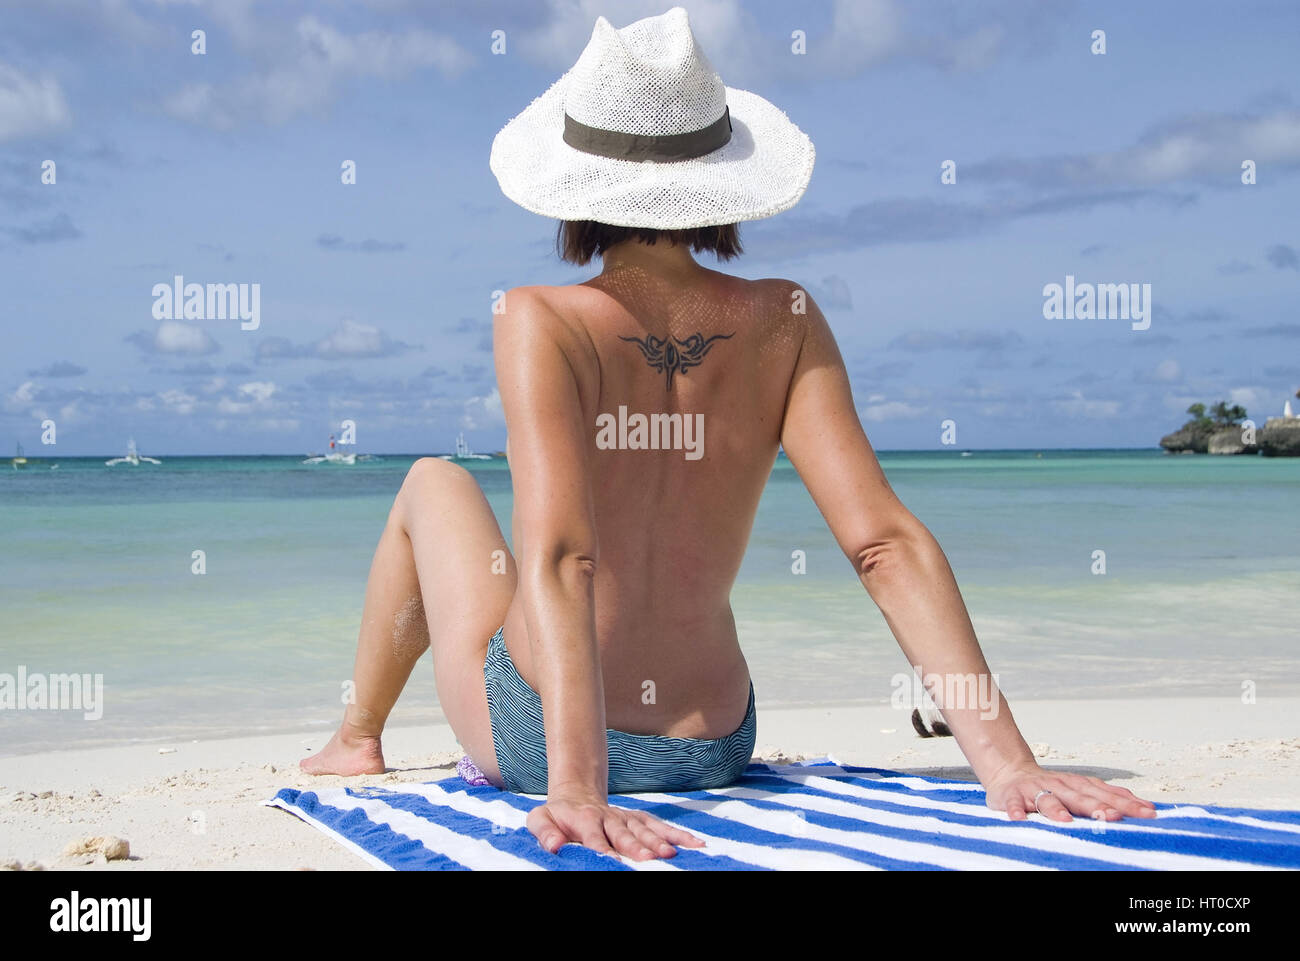 Junge Frau sitzt oben ohne am Strand - woman on the beach Stock Photo